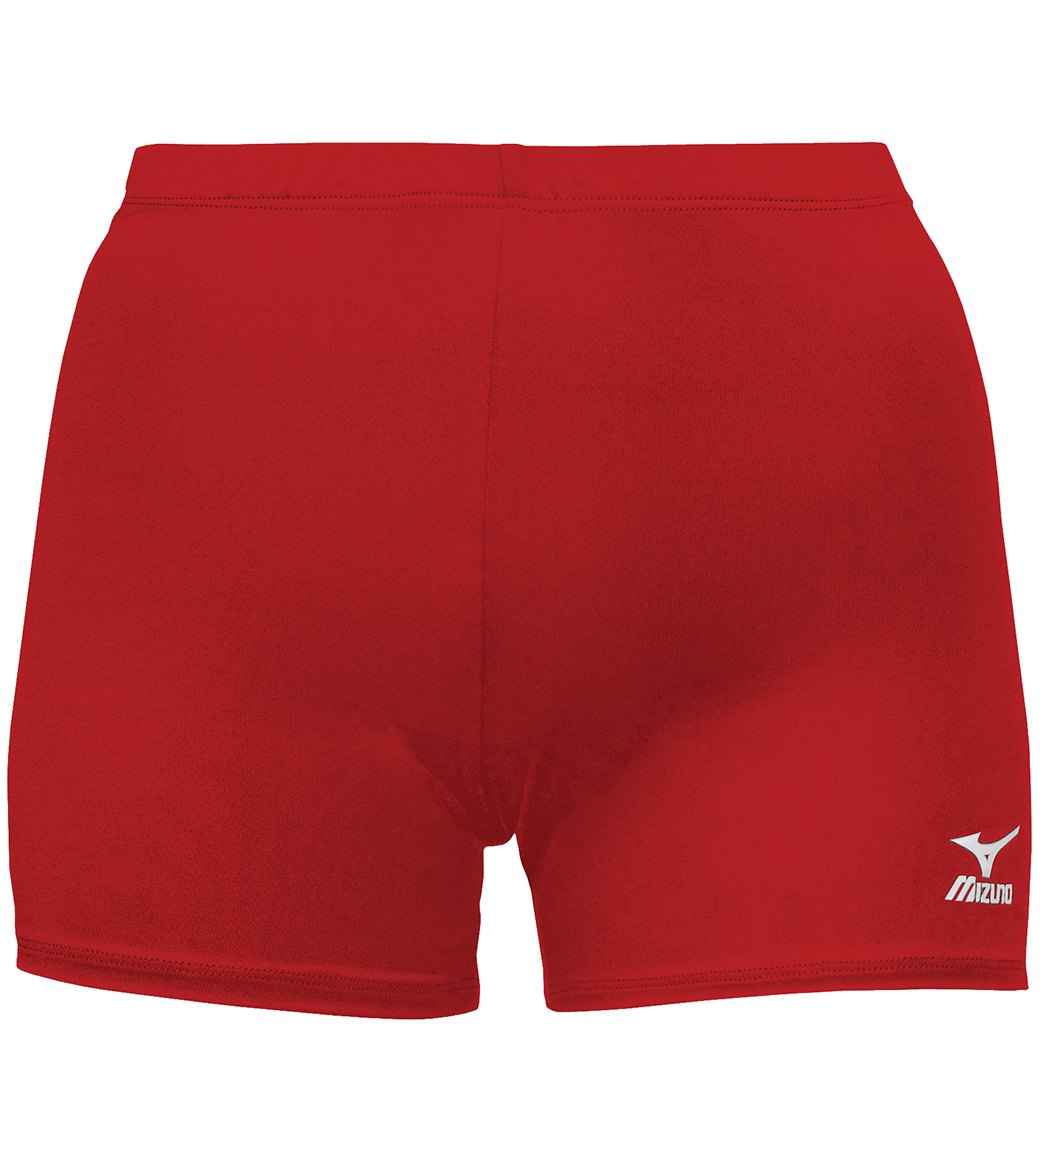 mizuno volleyball shorts size chart